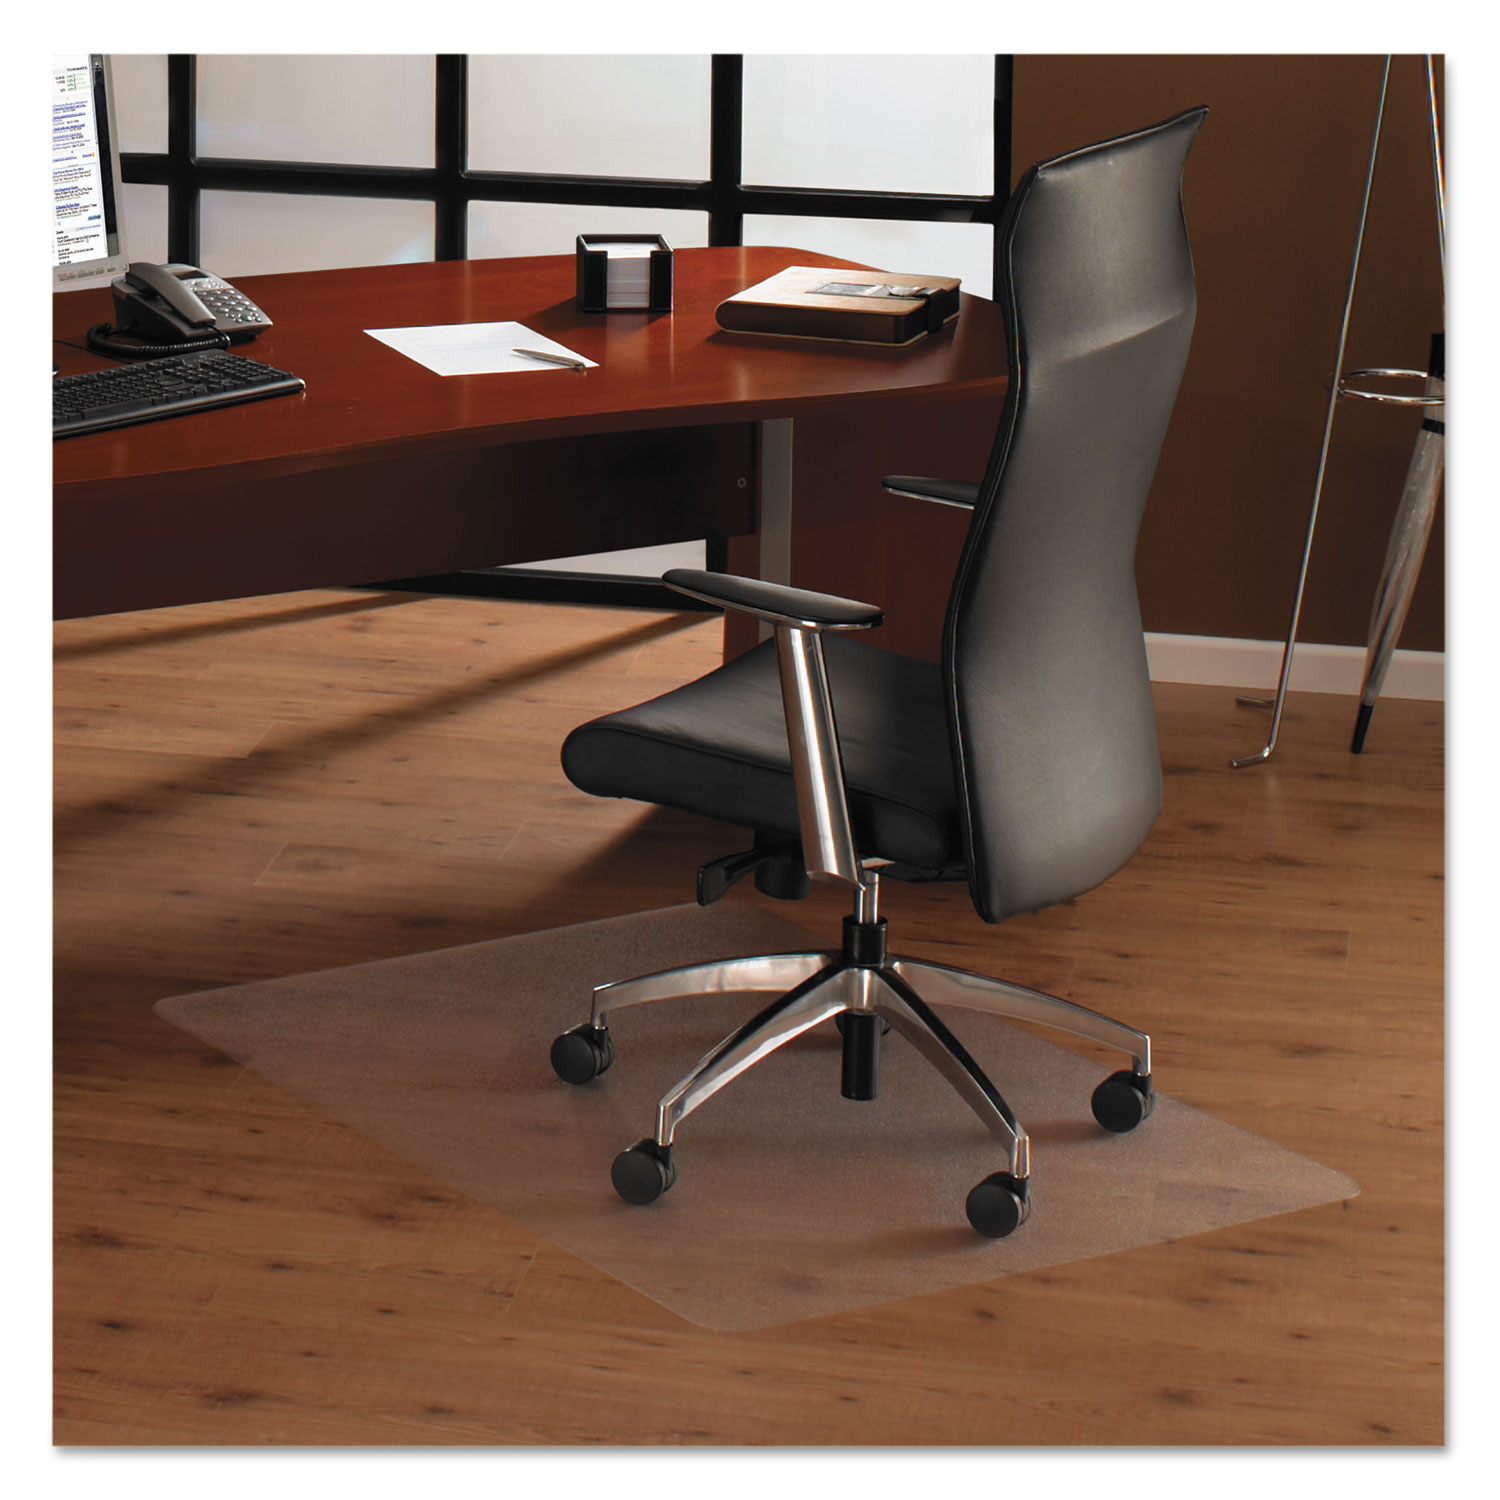 Cleartex Unomat Anti-Slip Chair Mat for Hard Floors & Flat Pile Carpets, 35 x 47